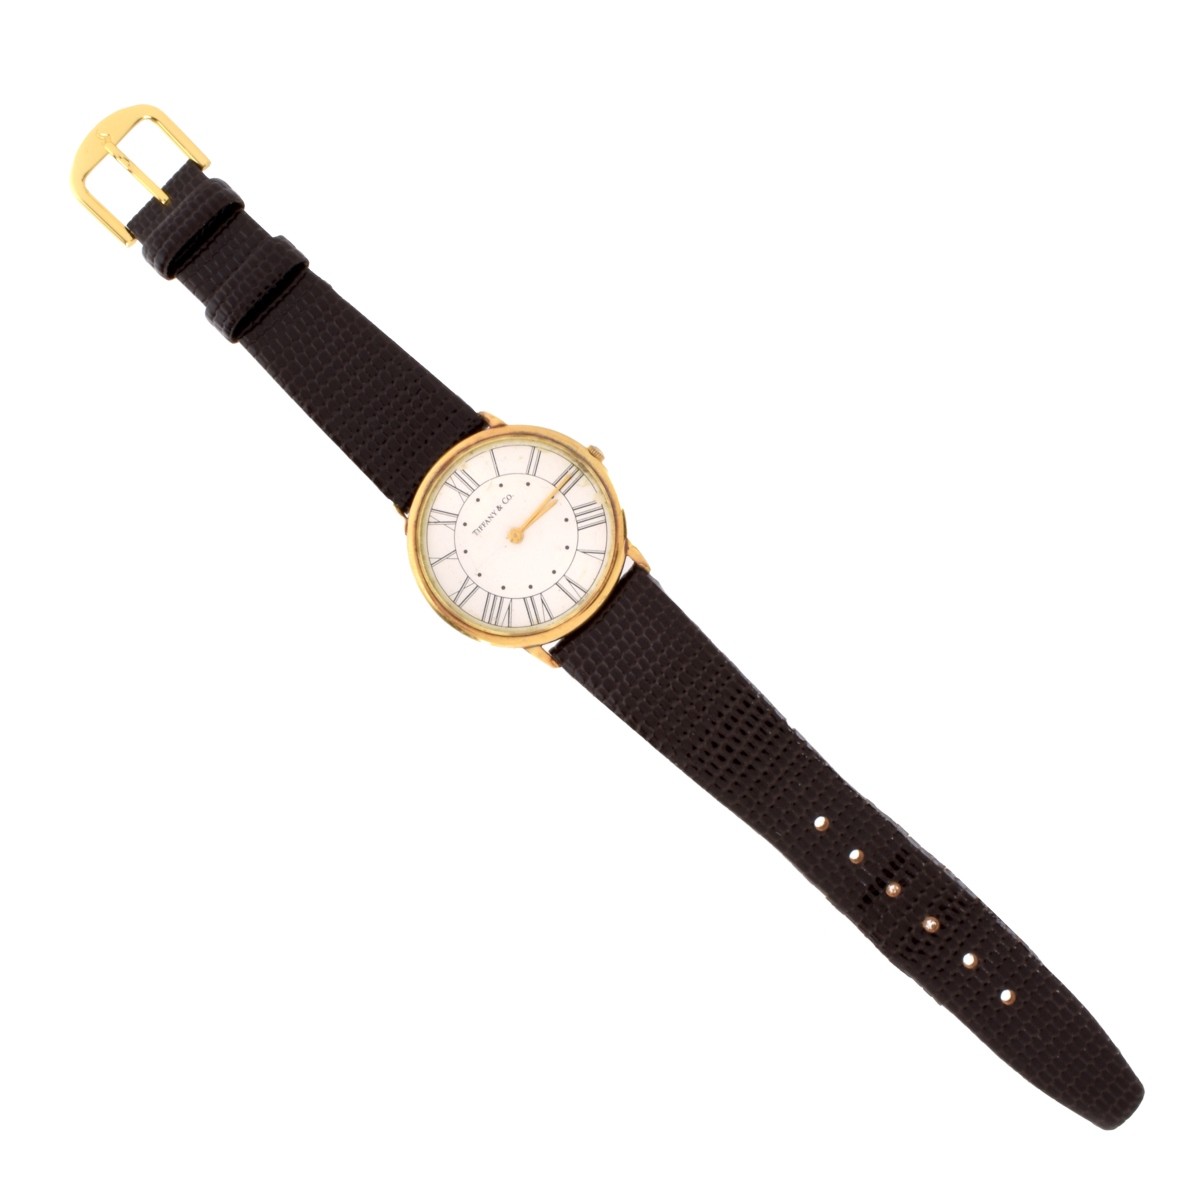 Tiffany & Co 14K Watch